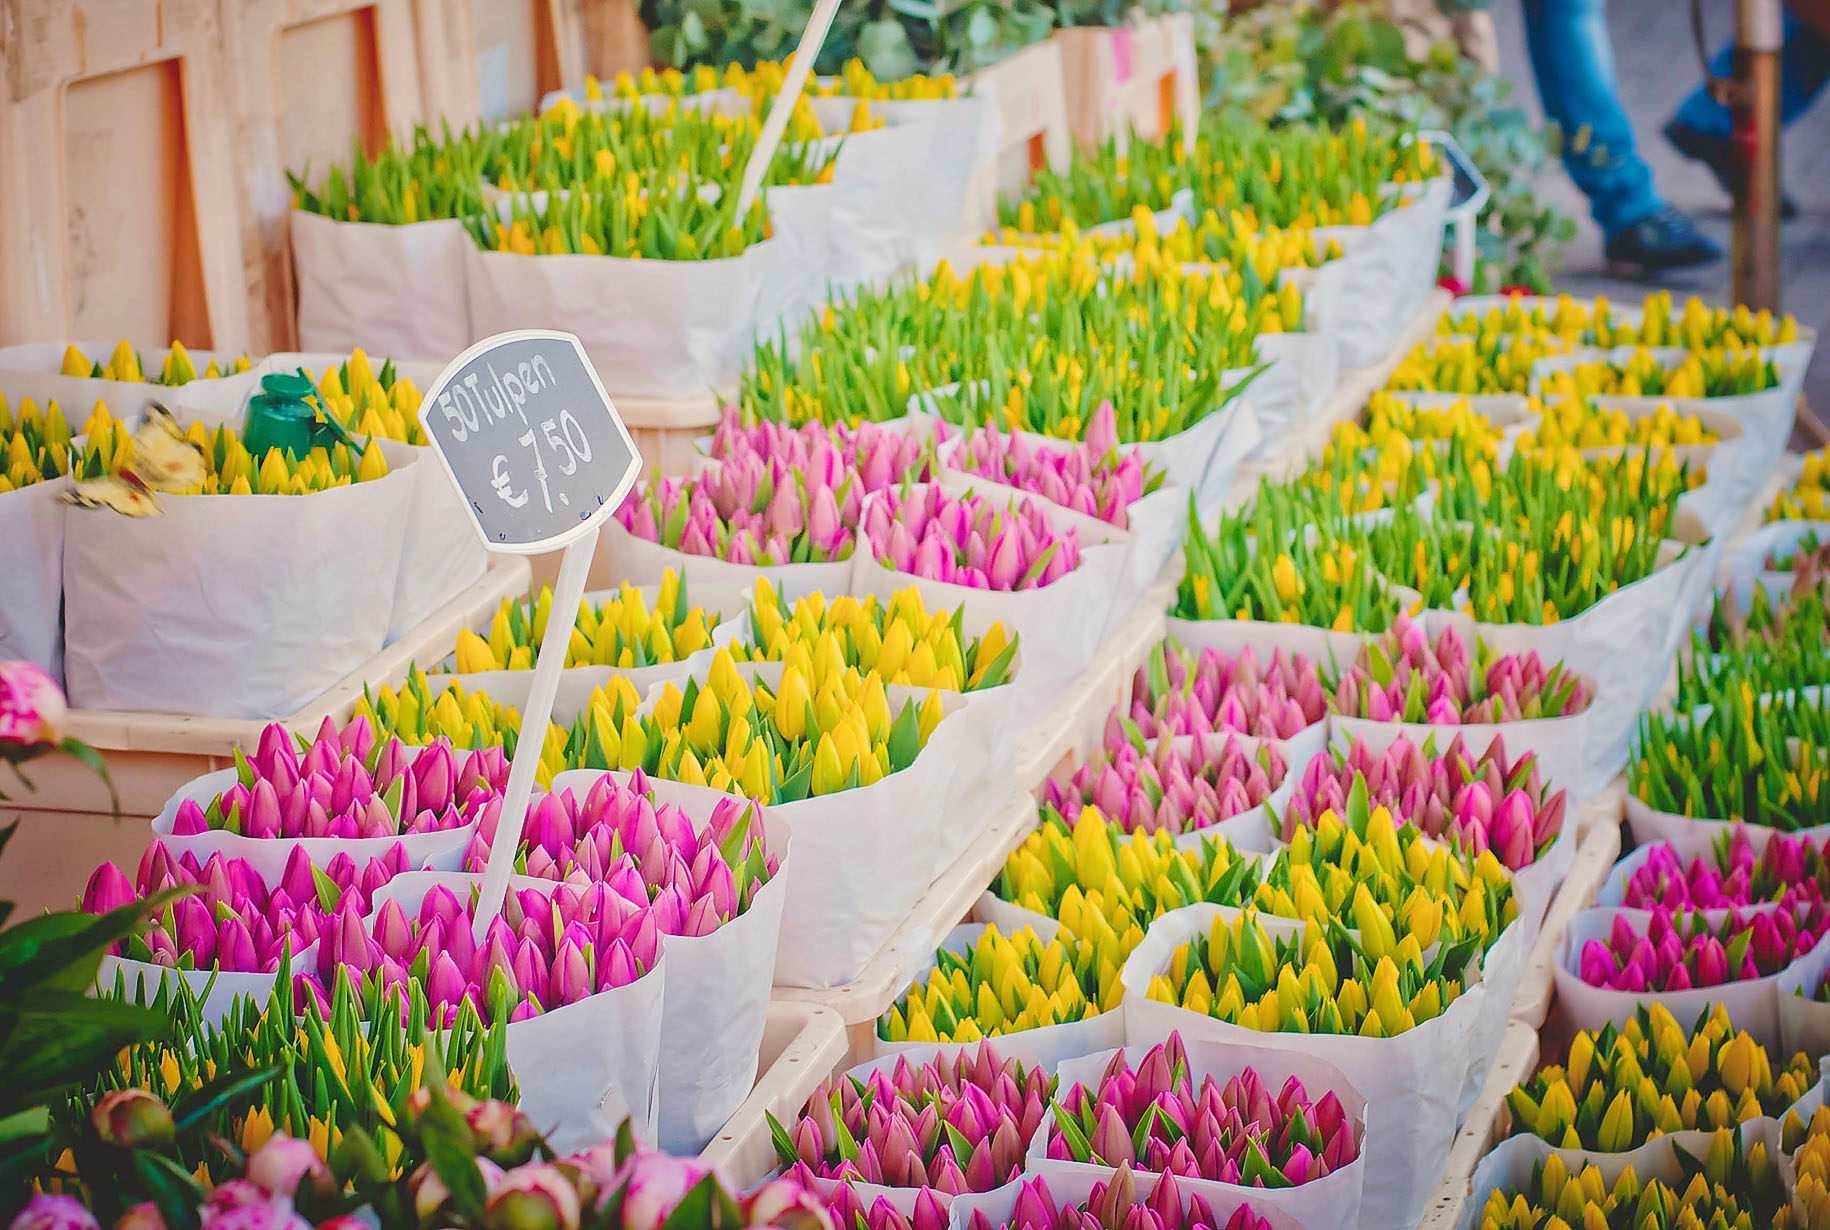 amsterdam flower market tours